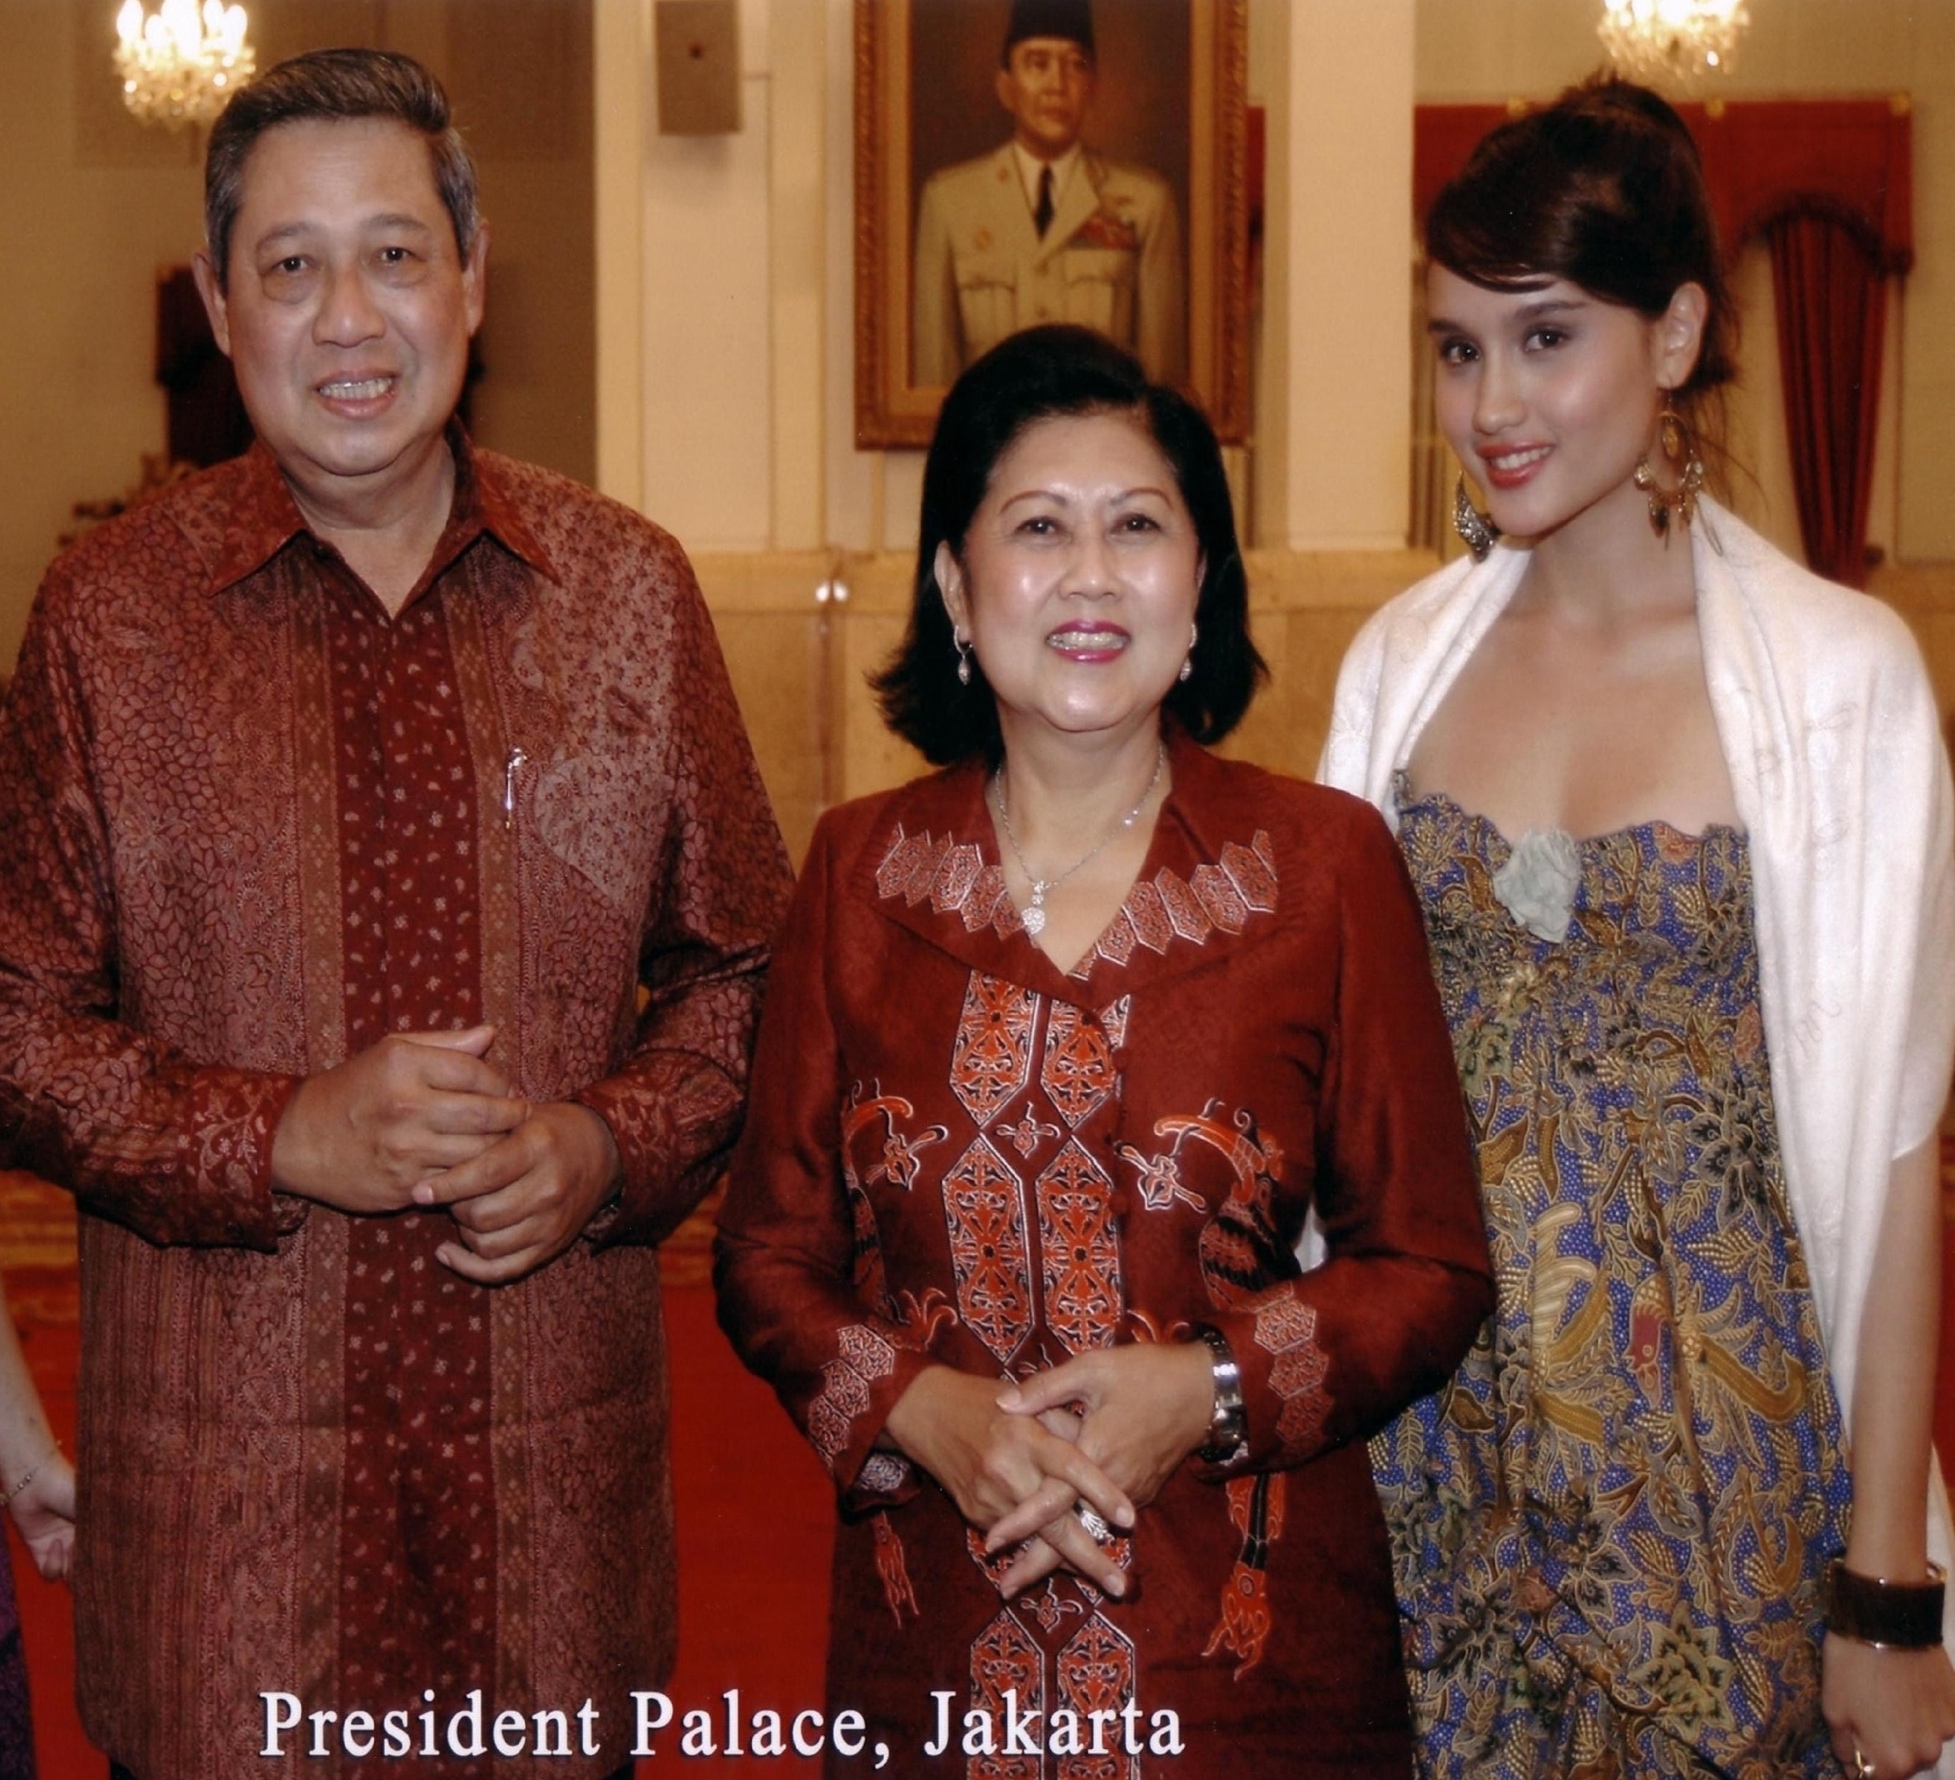 Cinta Laura Kiehl with President Susilo Bambang Yudhoyono and the First Lady.